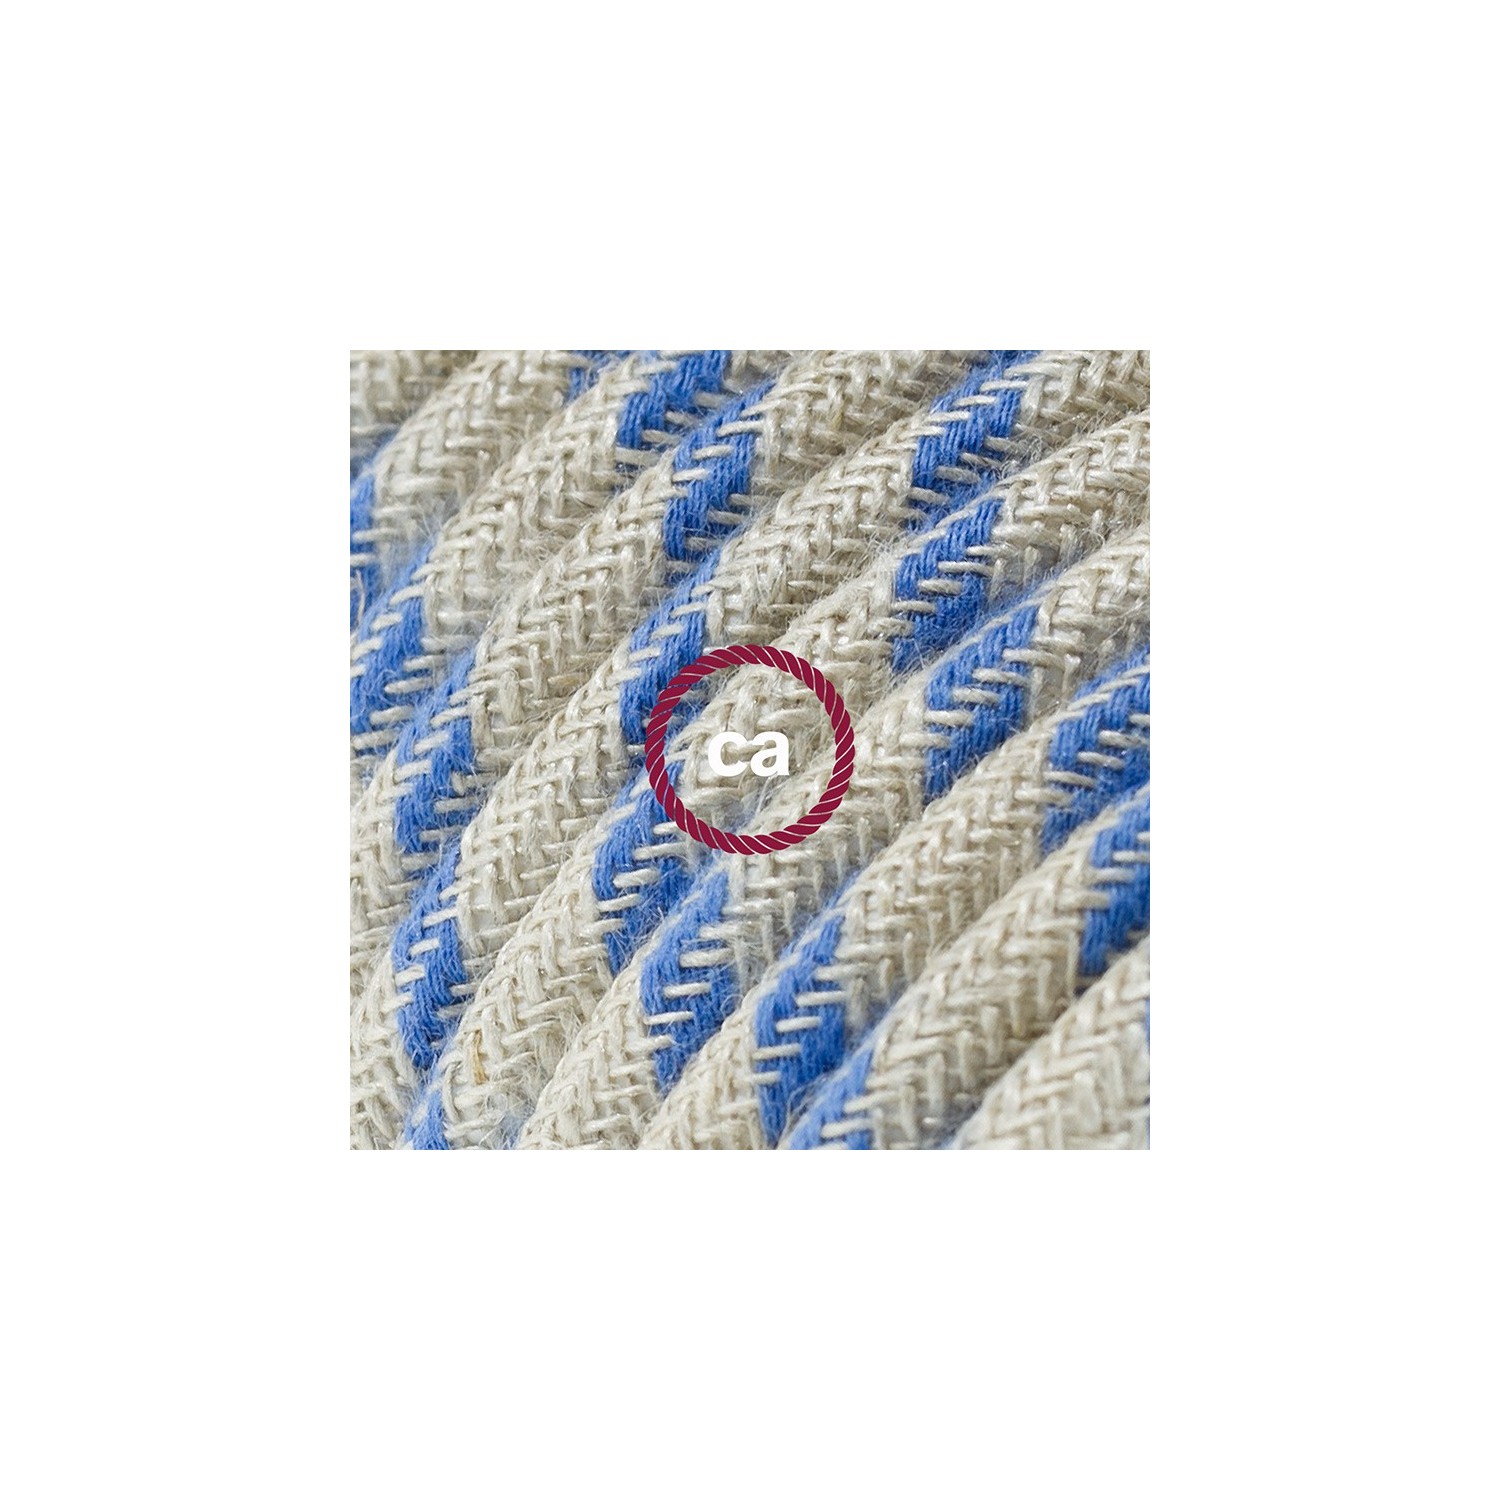 Rallonge électrique avec câble textile RD55 Coton et Lin Naturel Stripes Bleu Steward 2P 10A Made in Italy.